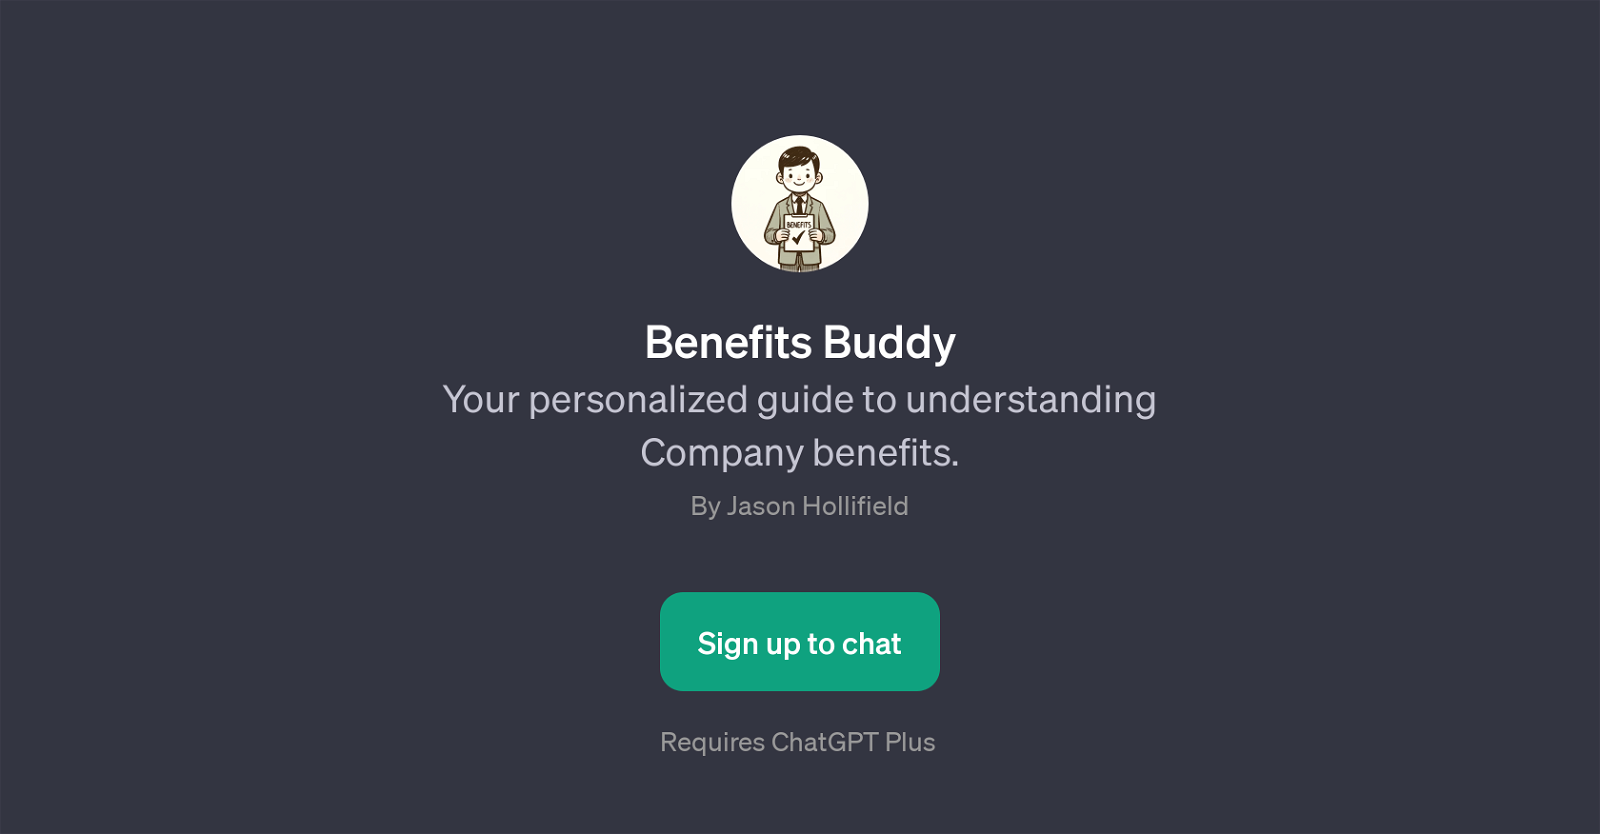 Benefits Buddy website